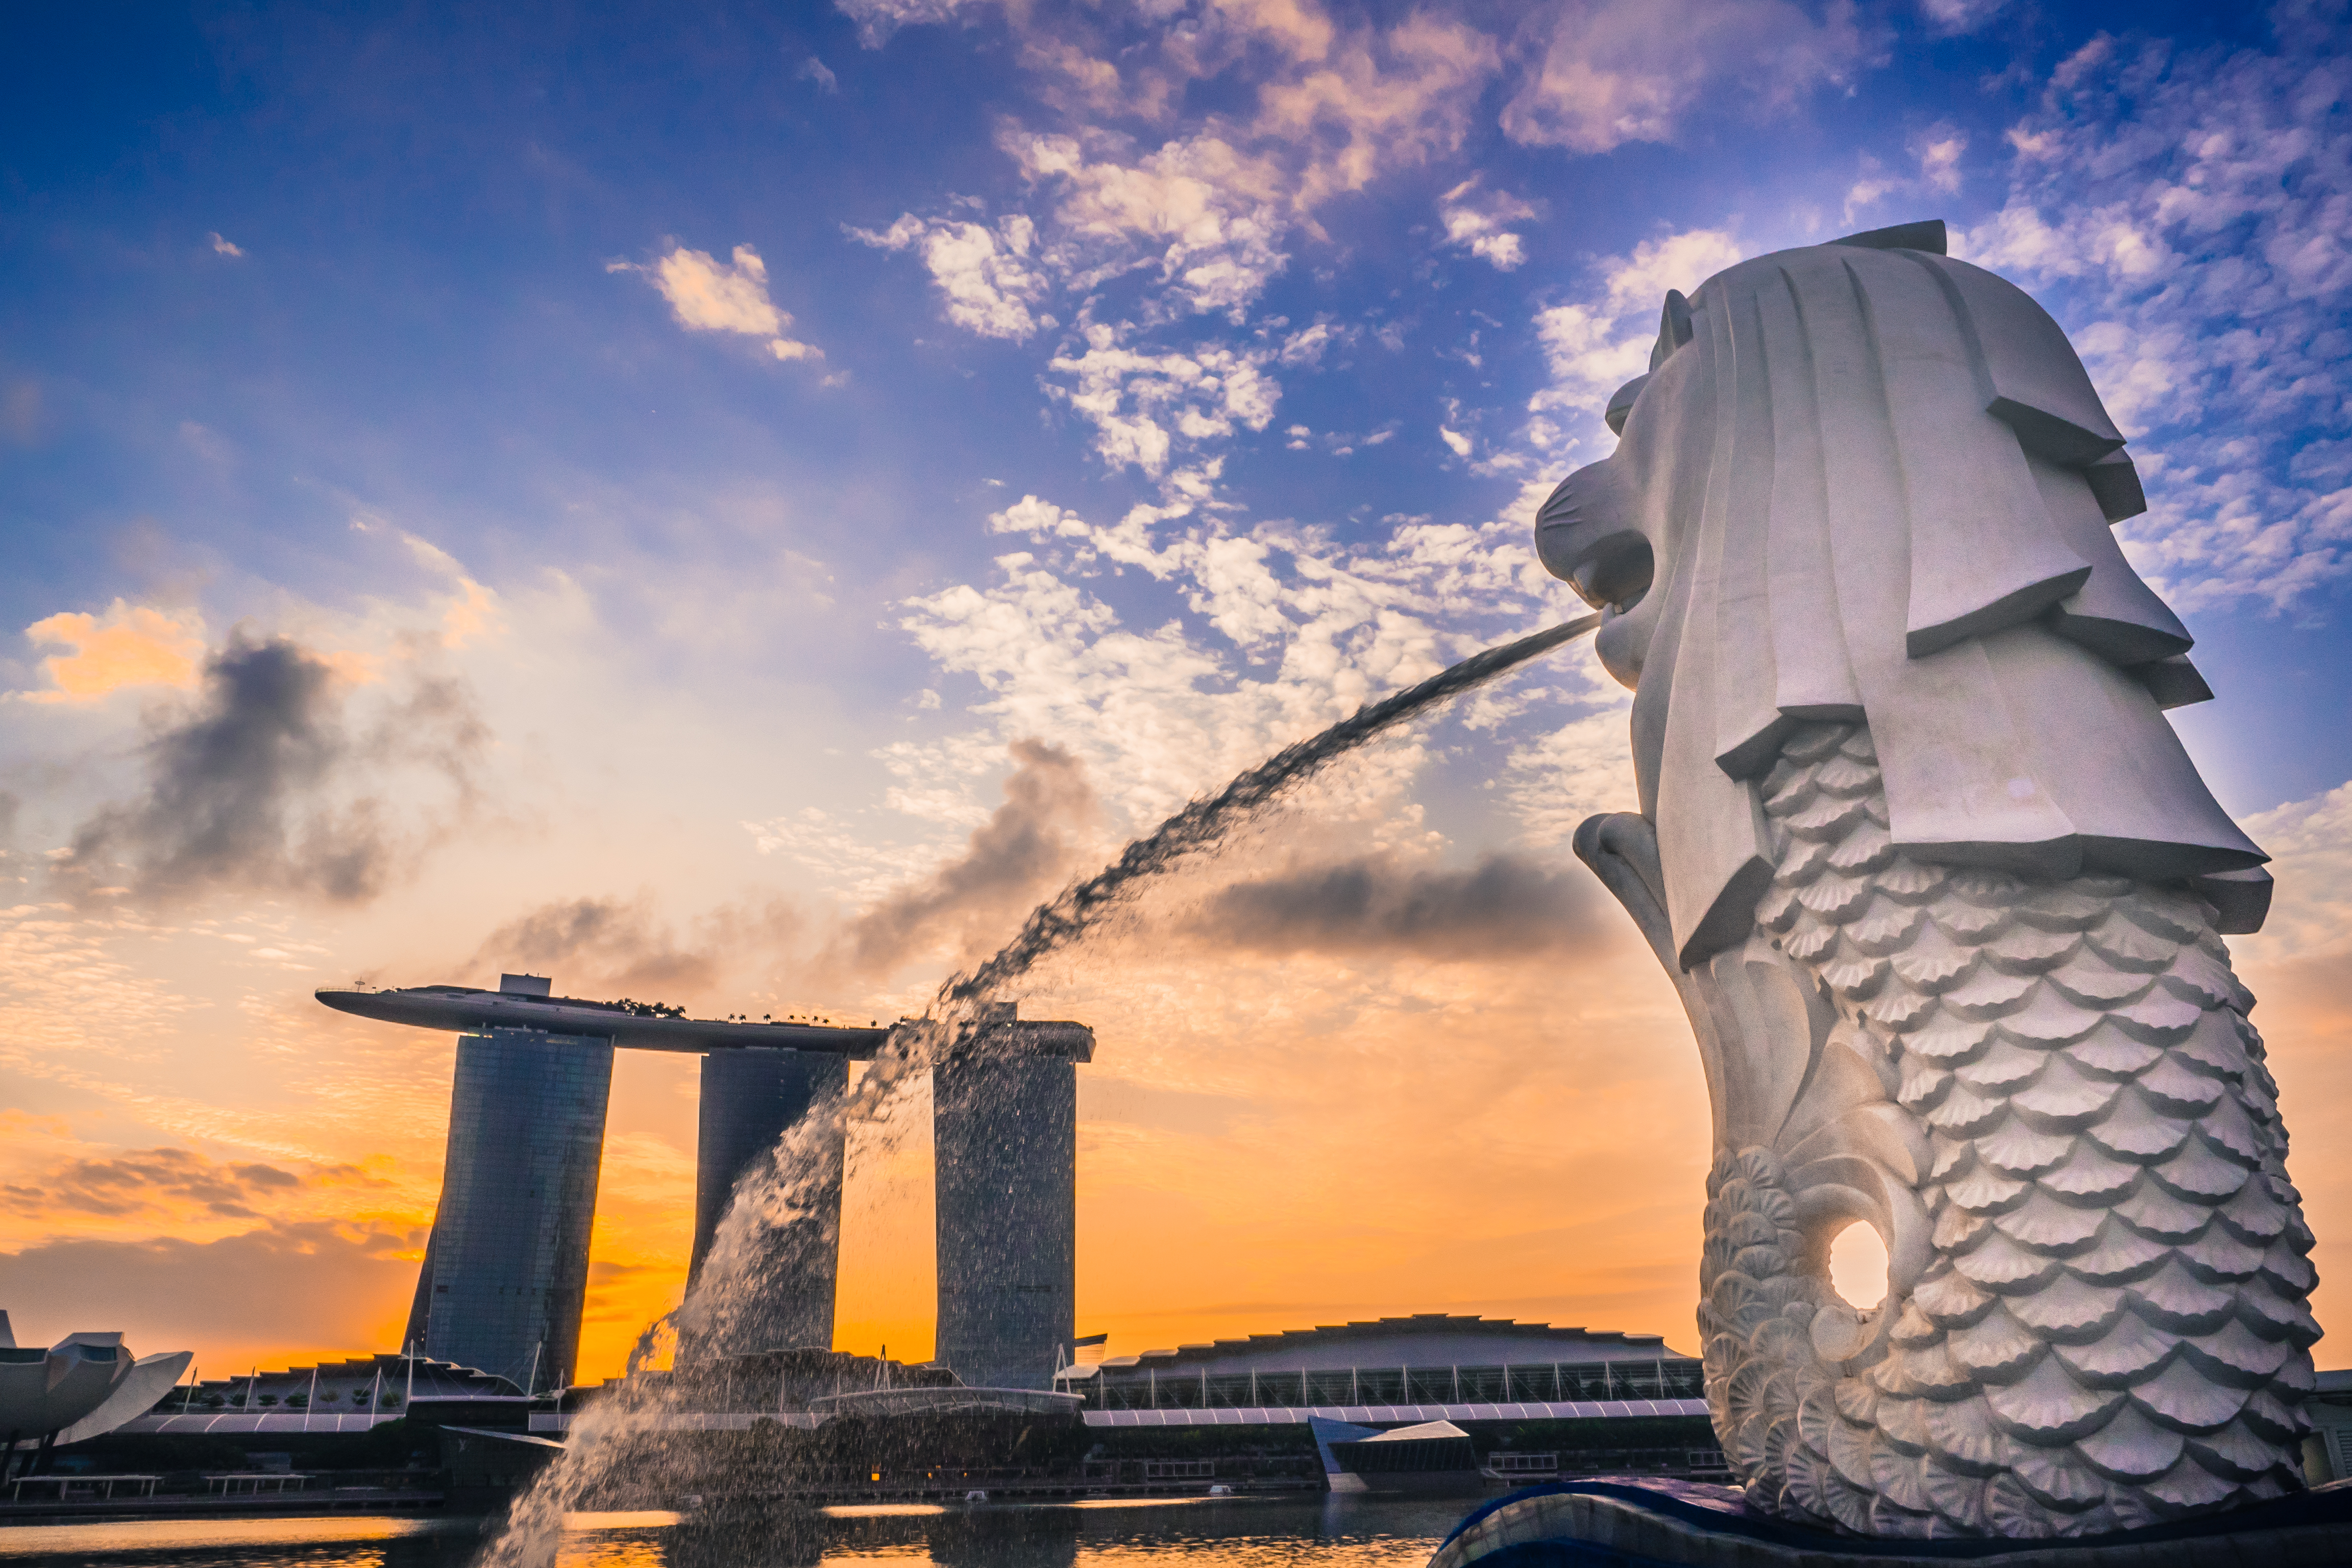 Tháp Sư tử Biển - Merlion Tower - Singapore - Singapore